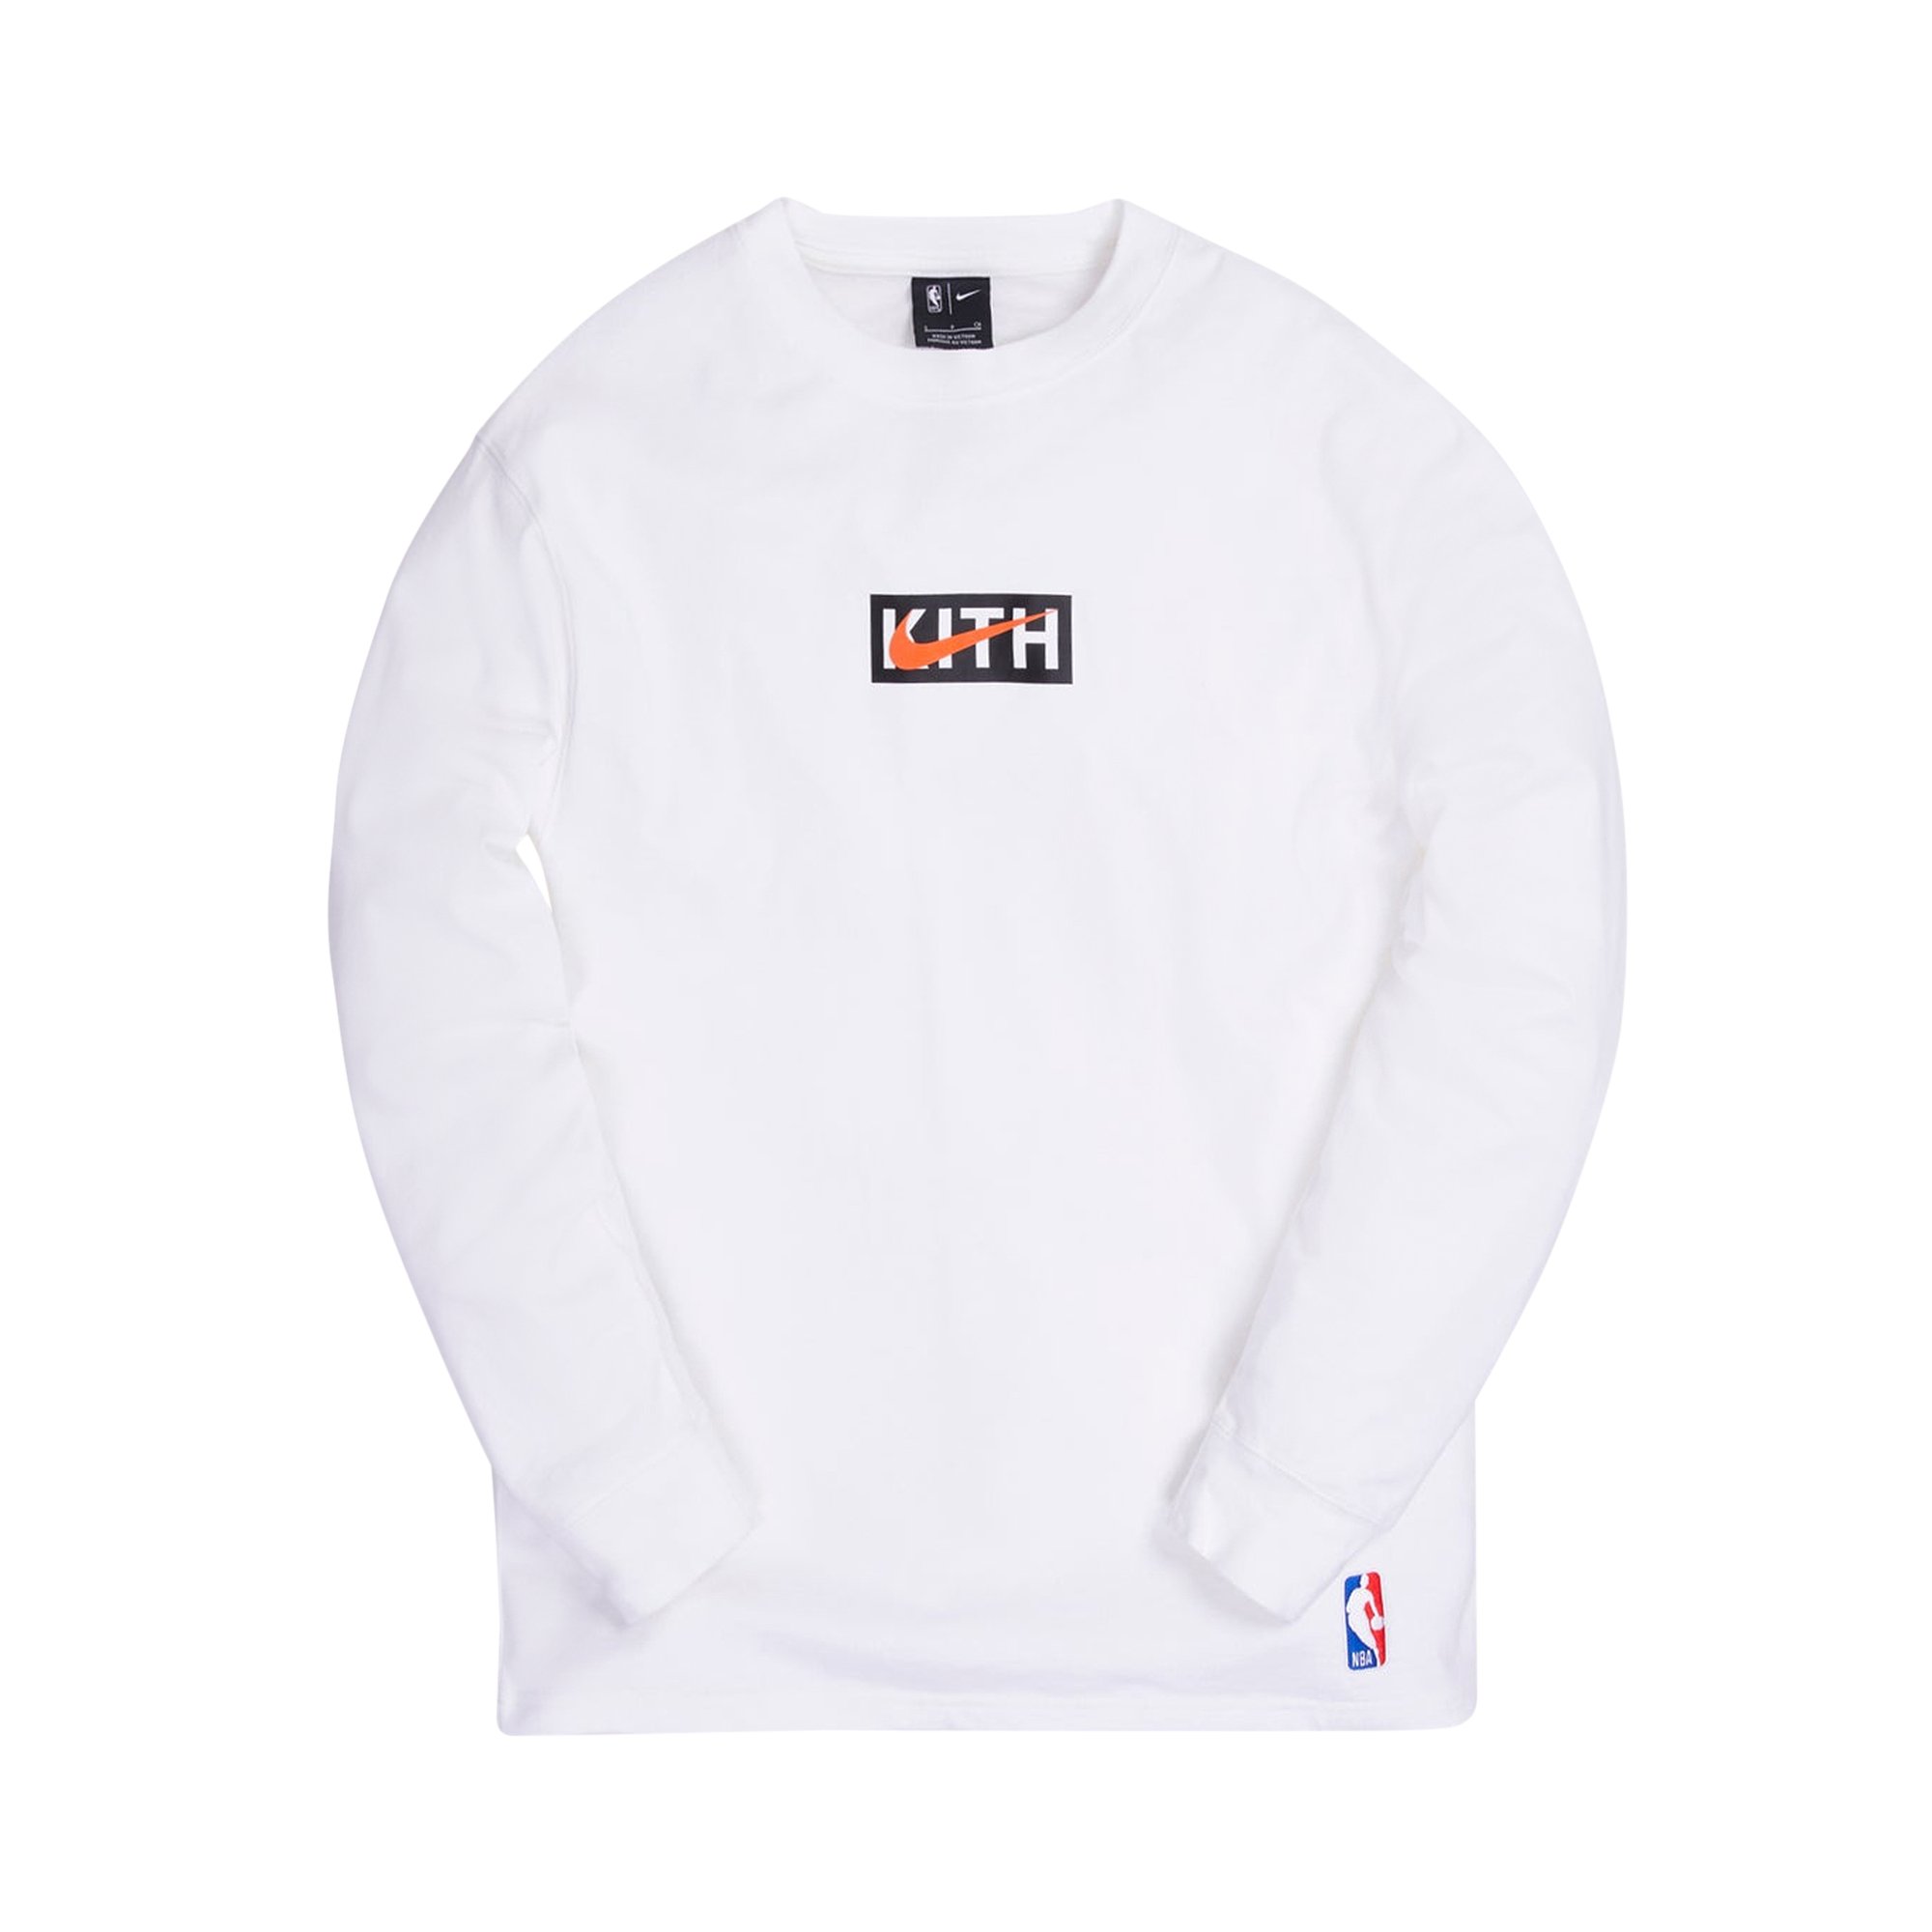 Buy Kith & Nike For New York Knicks Long-Sleeve Tee 'White